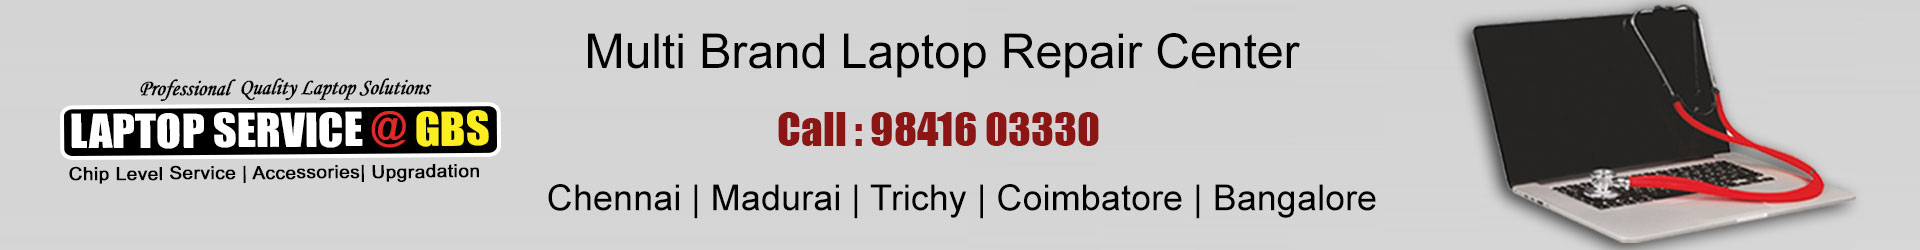 laptop service center in porur chennai